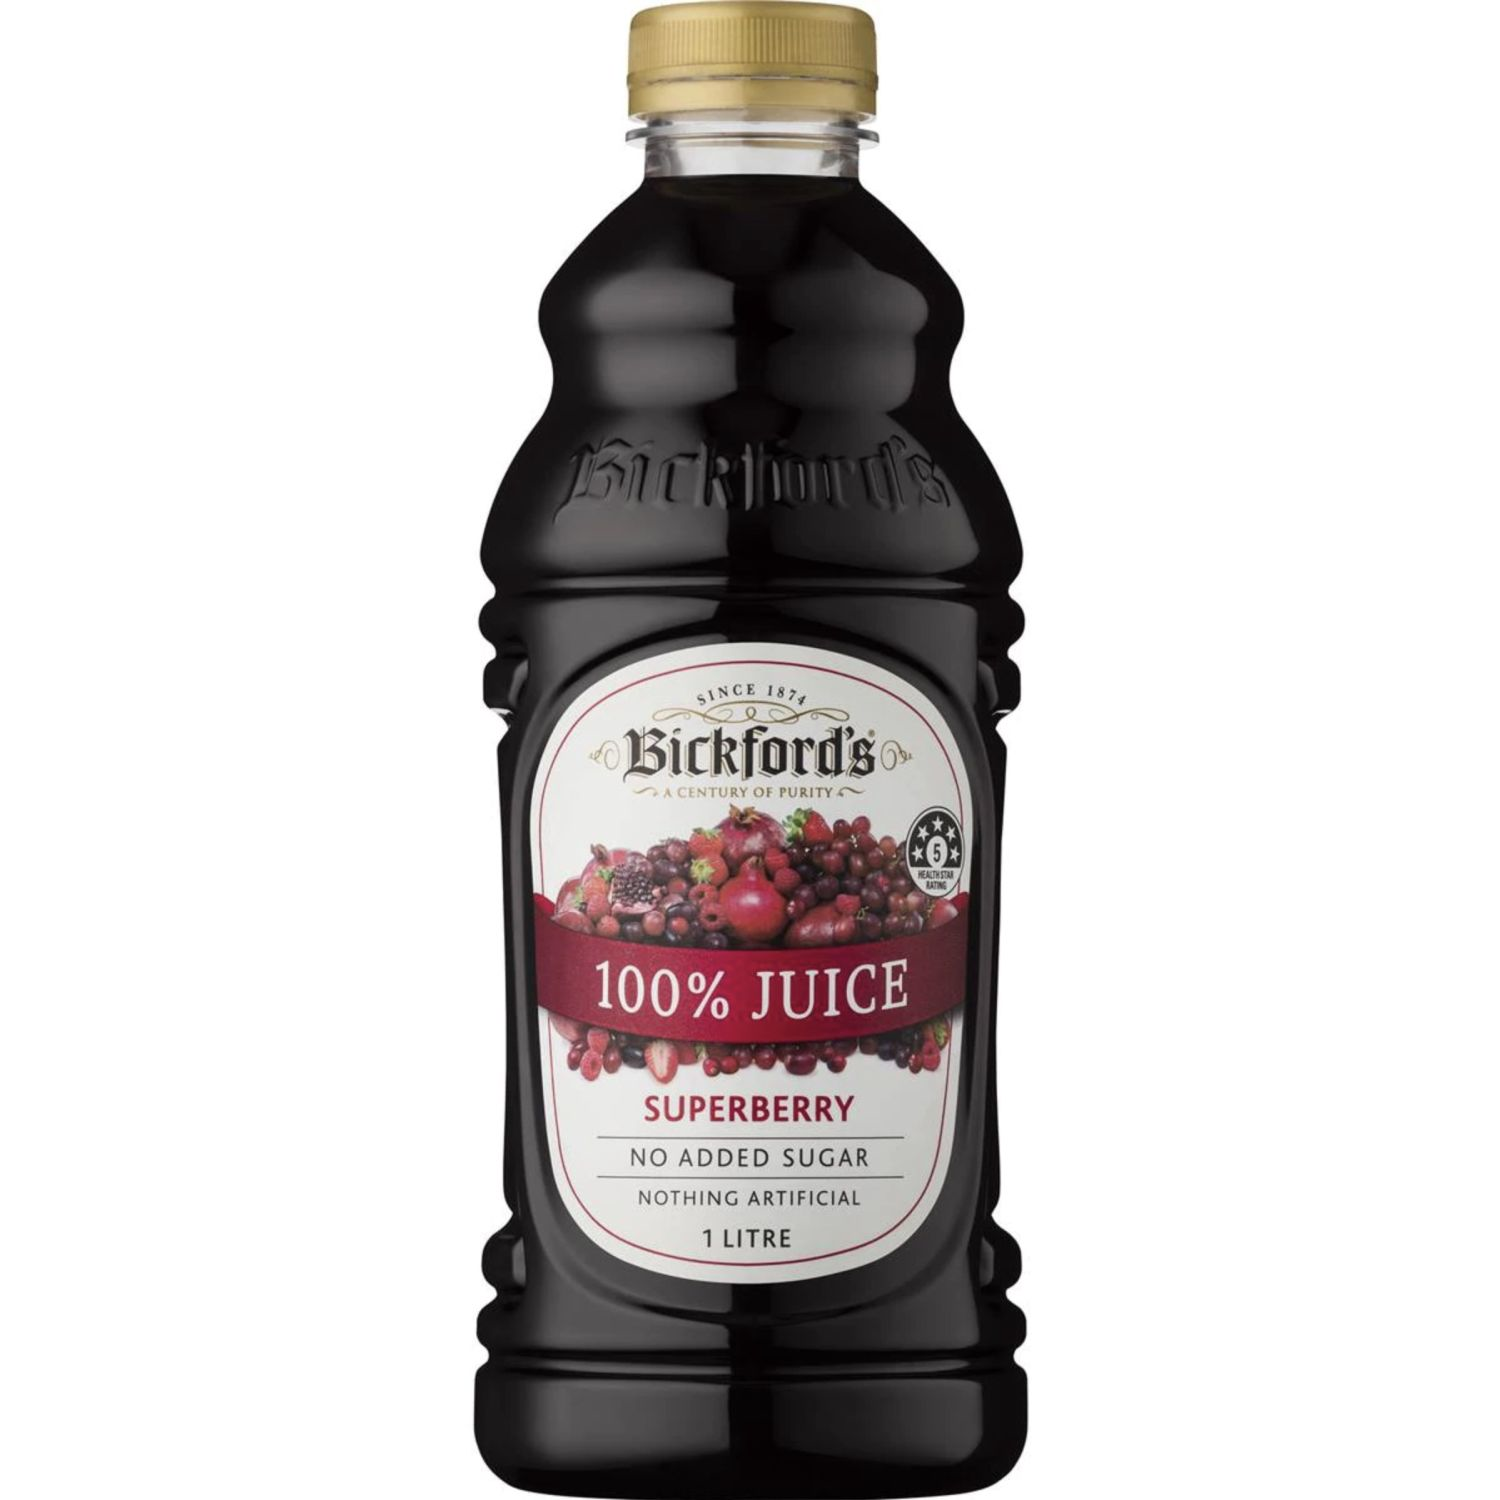 Bickford's Super Berry Juice, 1 Litre